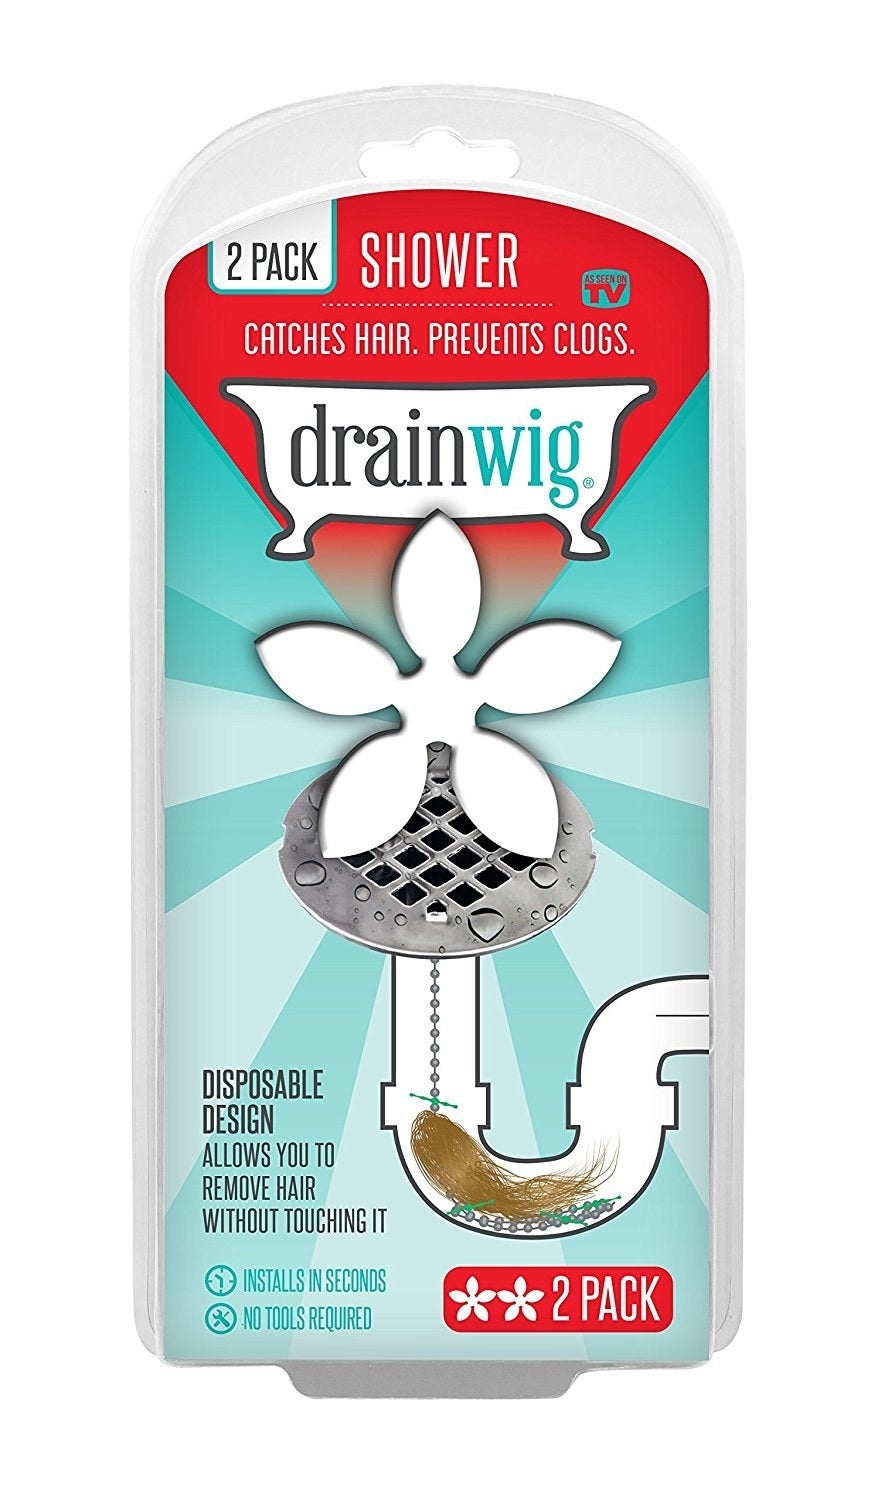 DrainWig - Keep Your Drains Clog Free the Easy Way! - Bullock's Buzz